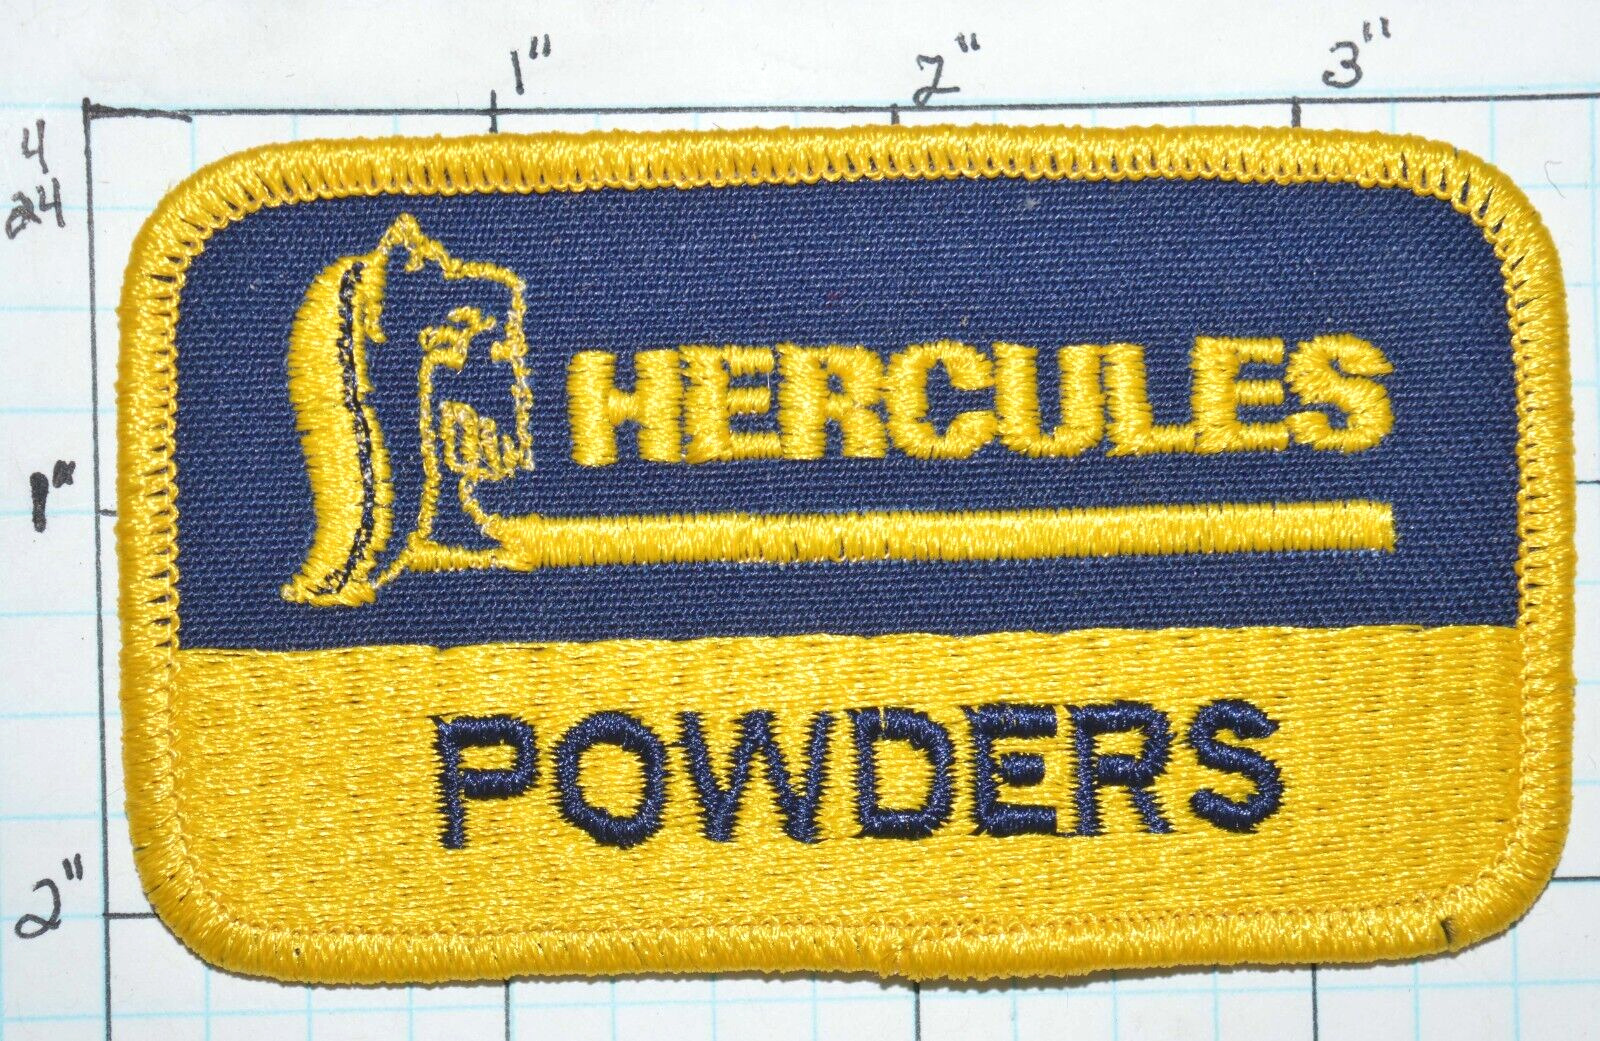 HERCULES POWDERS RELOADER AMMO 1912 - 2008 ADVERTISING LOGO PATCH